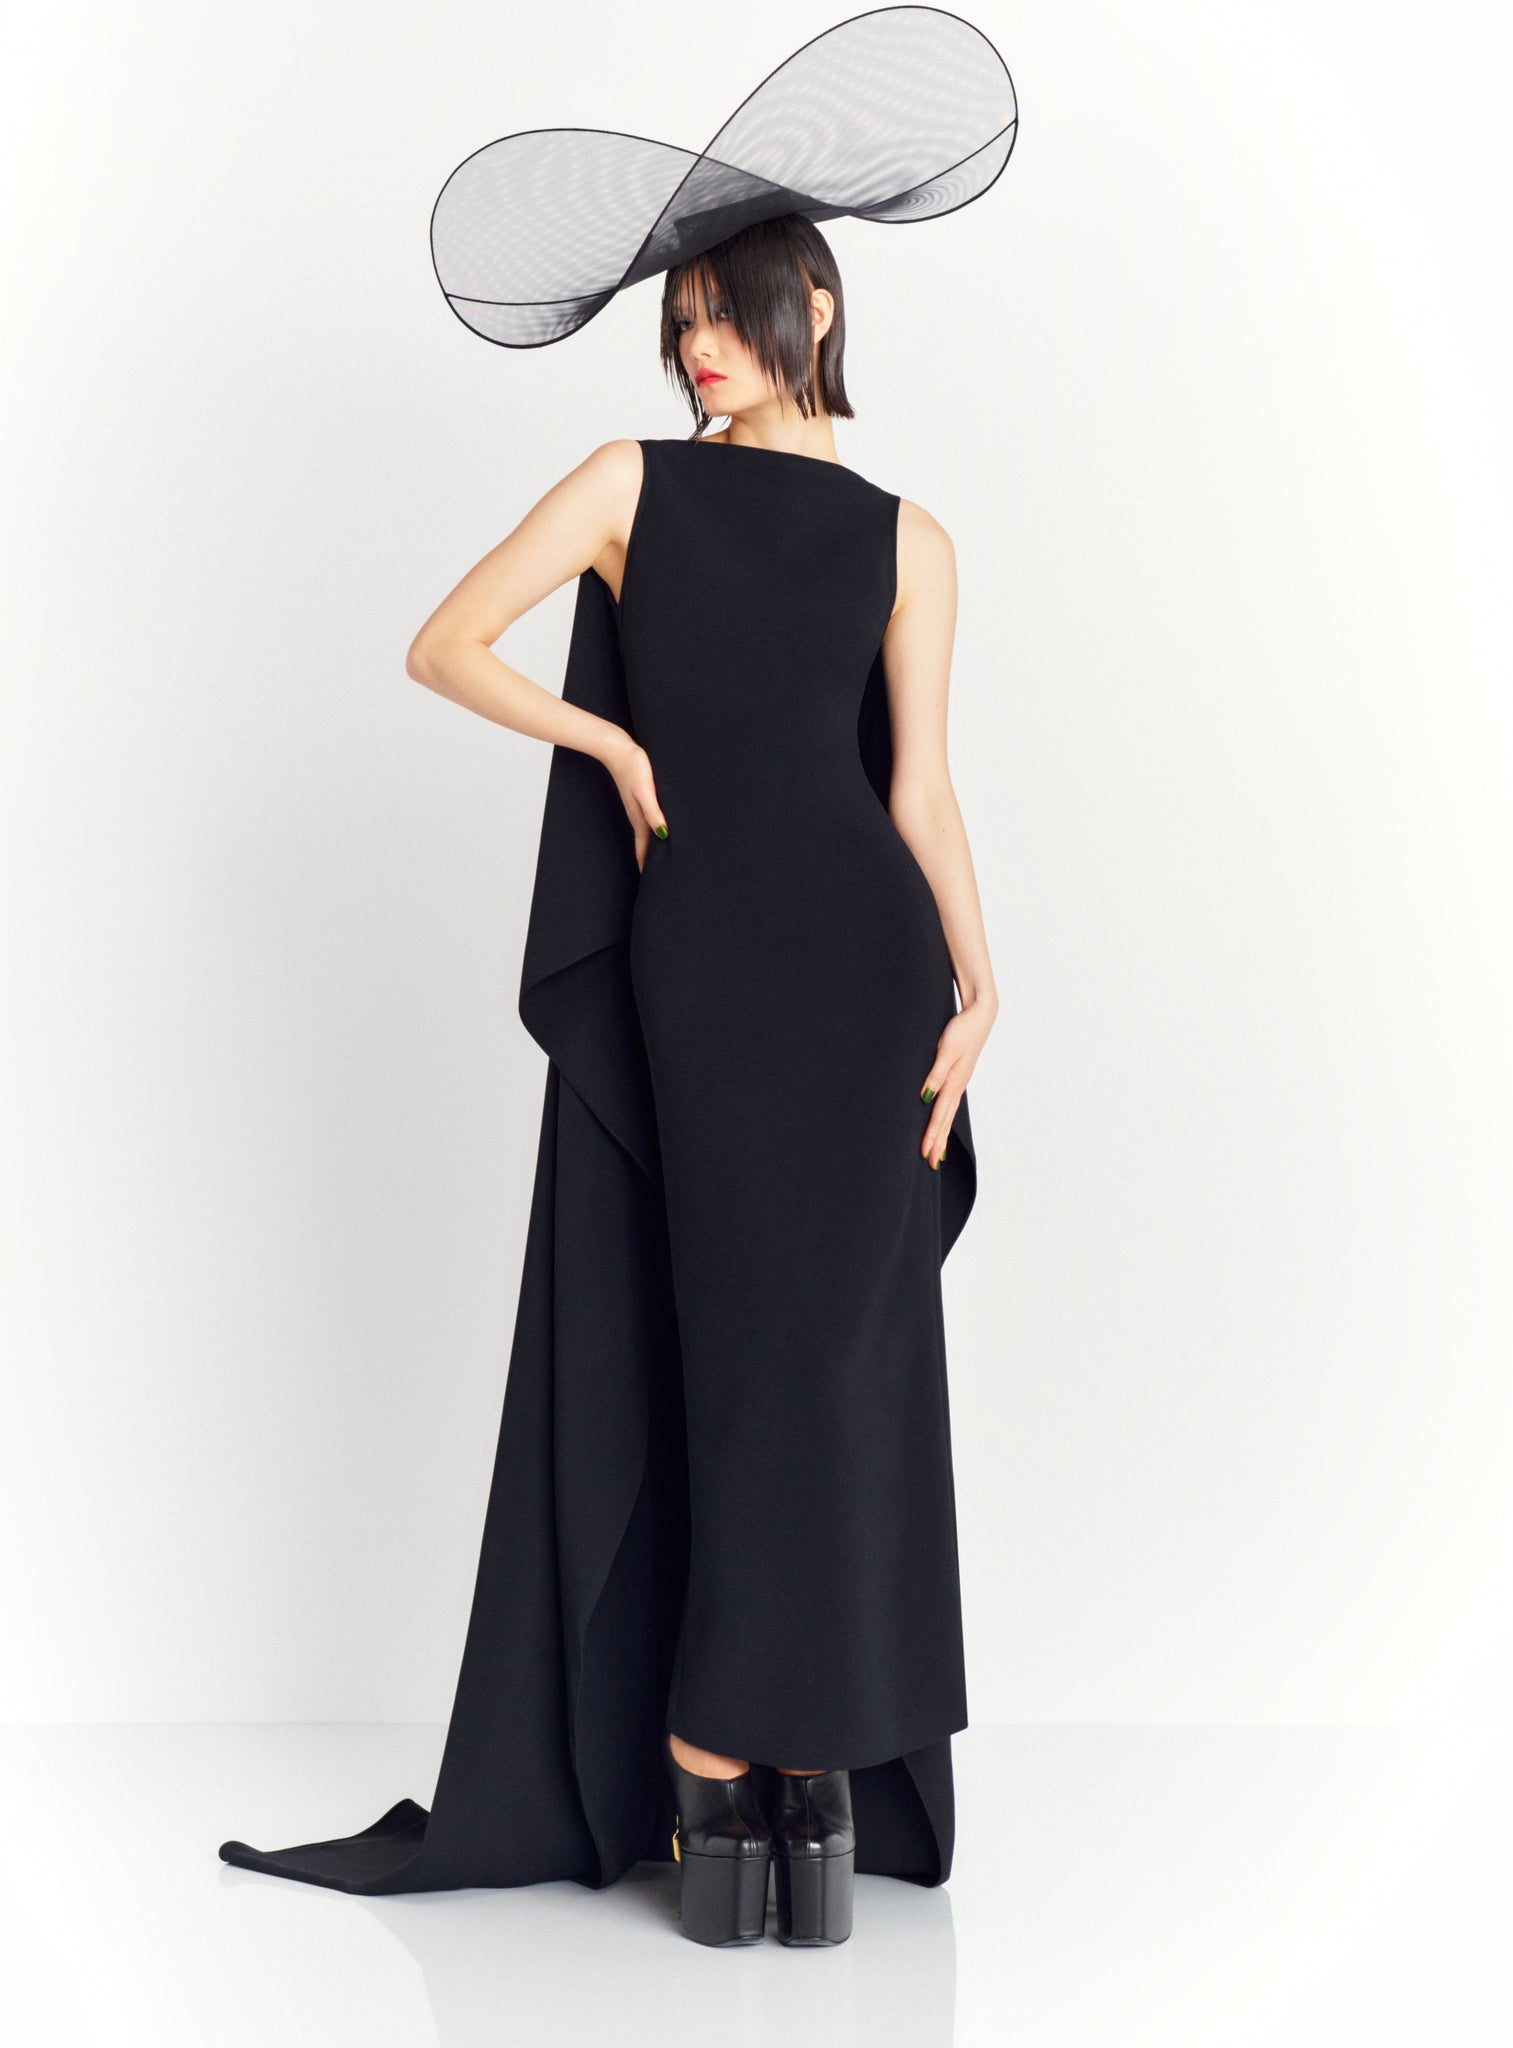 The Kaila Maxi Dress in Black